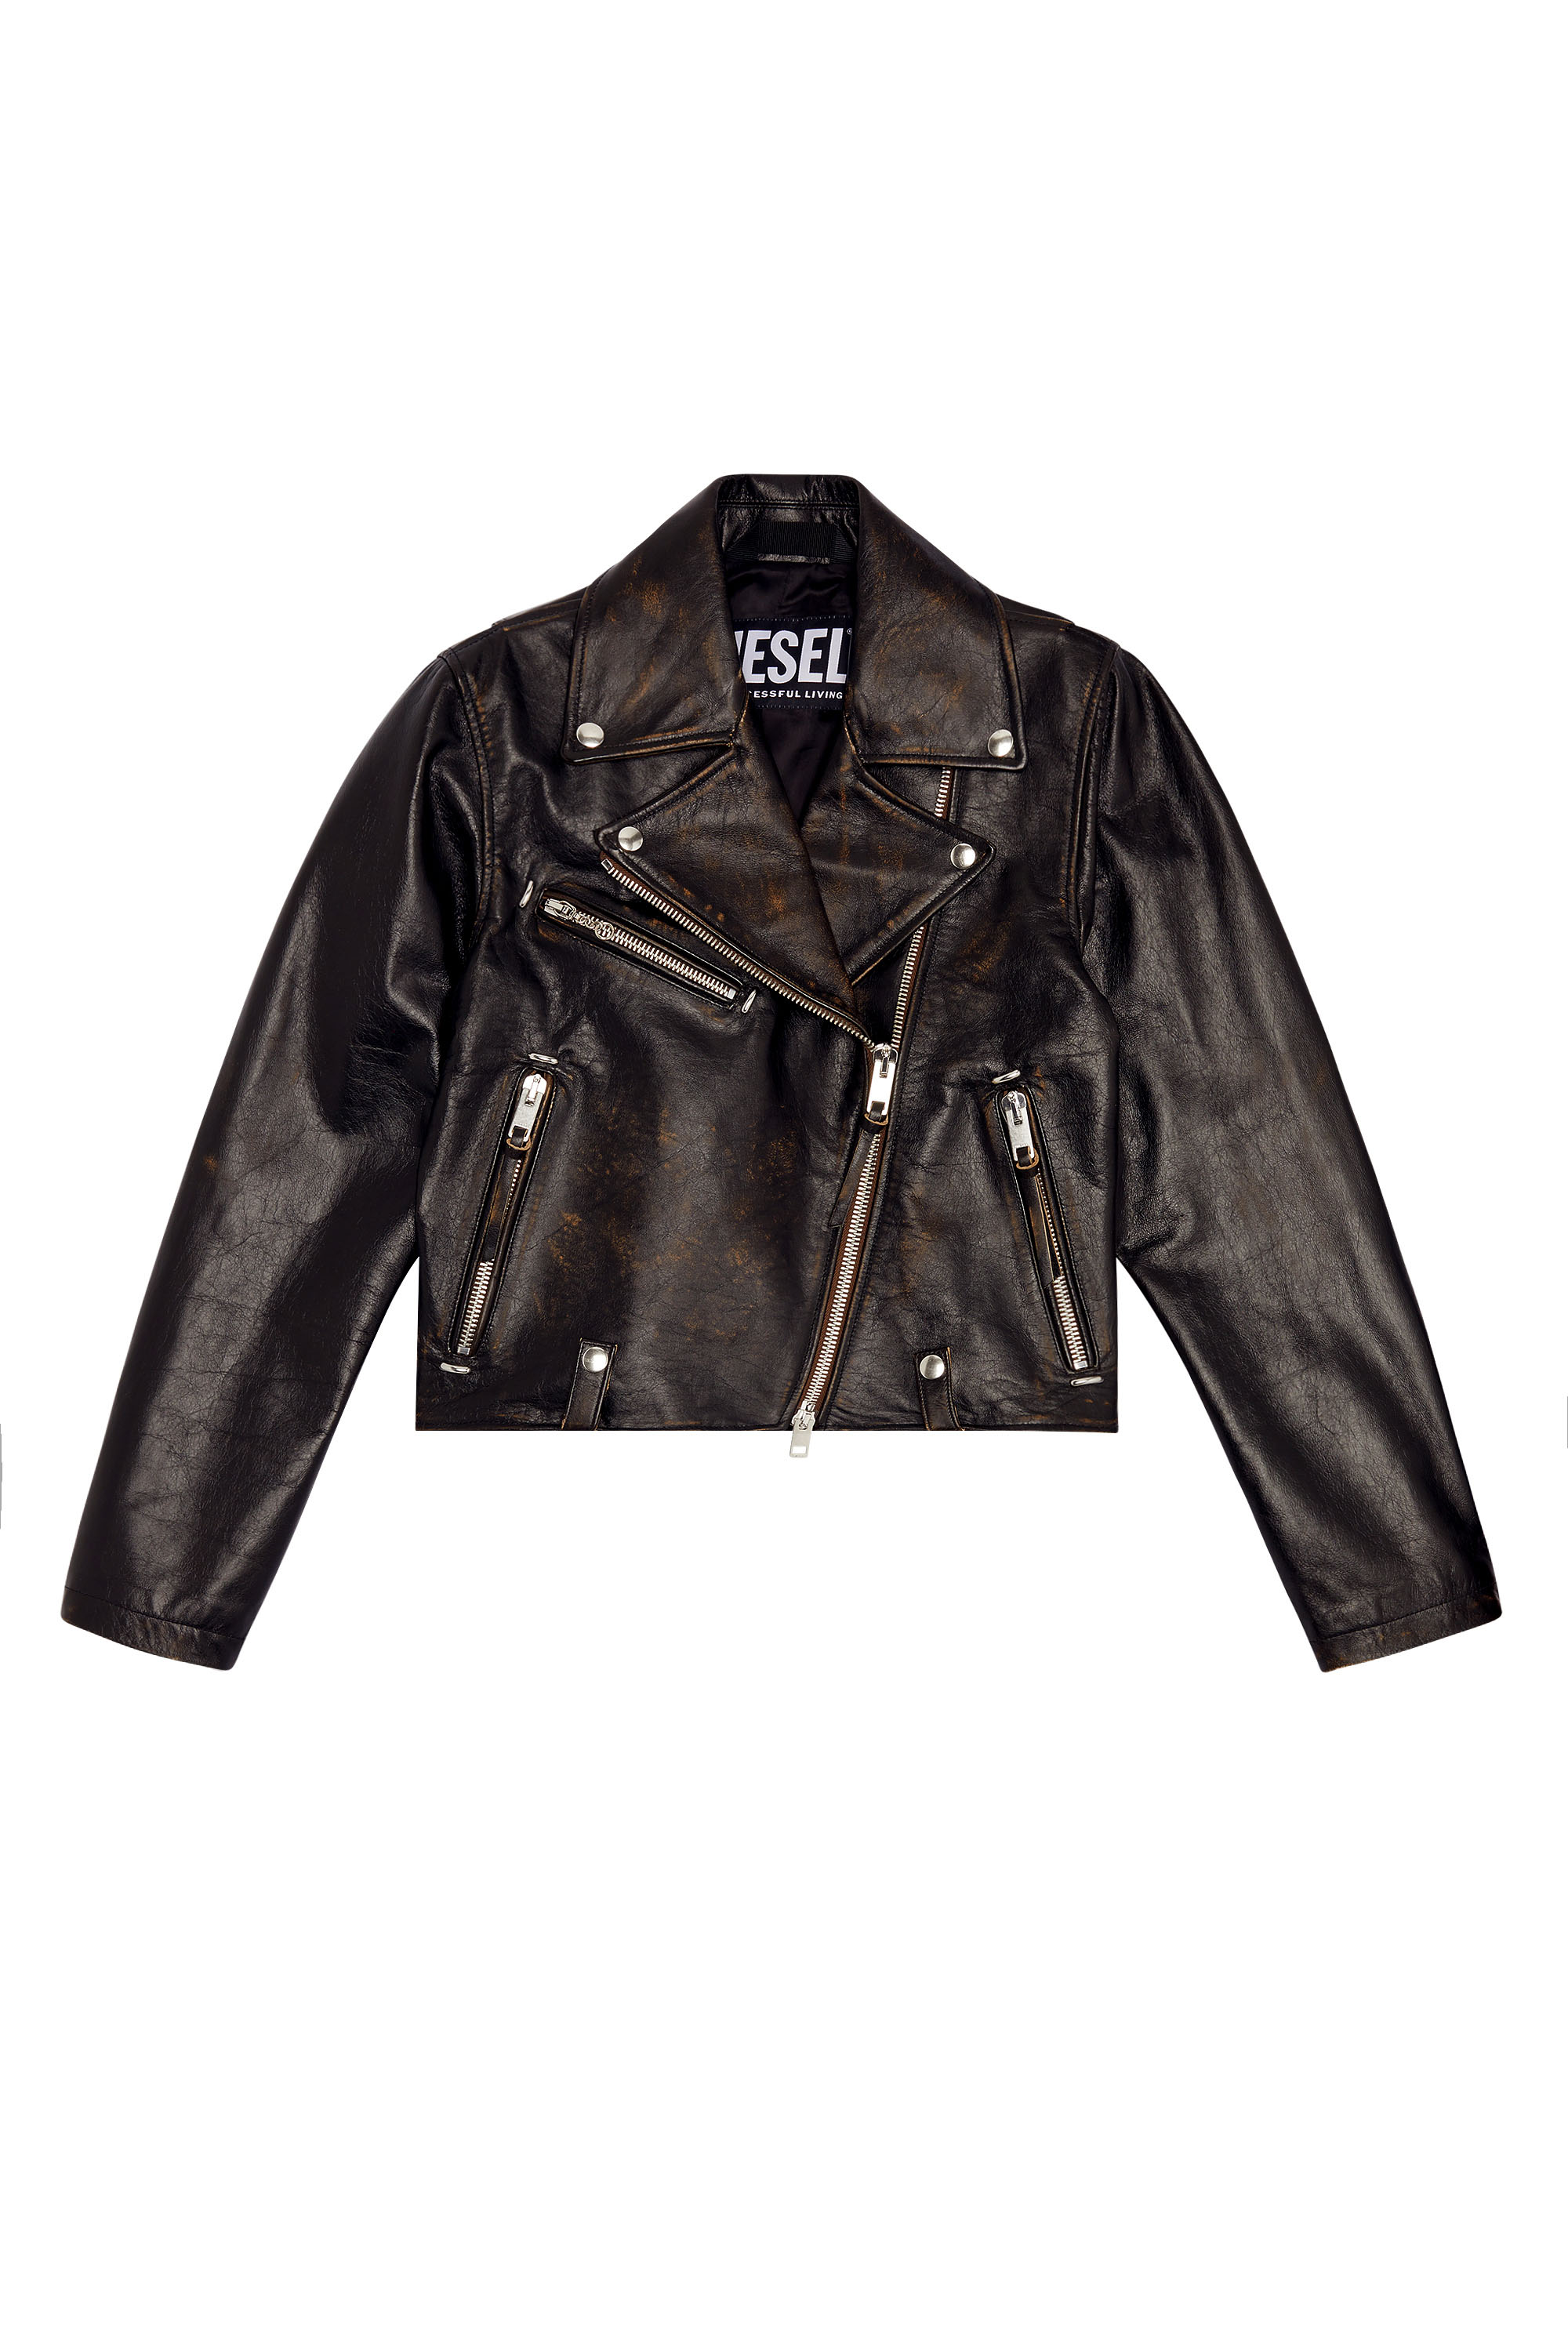 Diesel - L-EDMEA-CL, Woman Biker jacket in treated leather in Black - Image 6